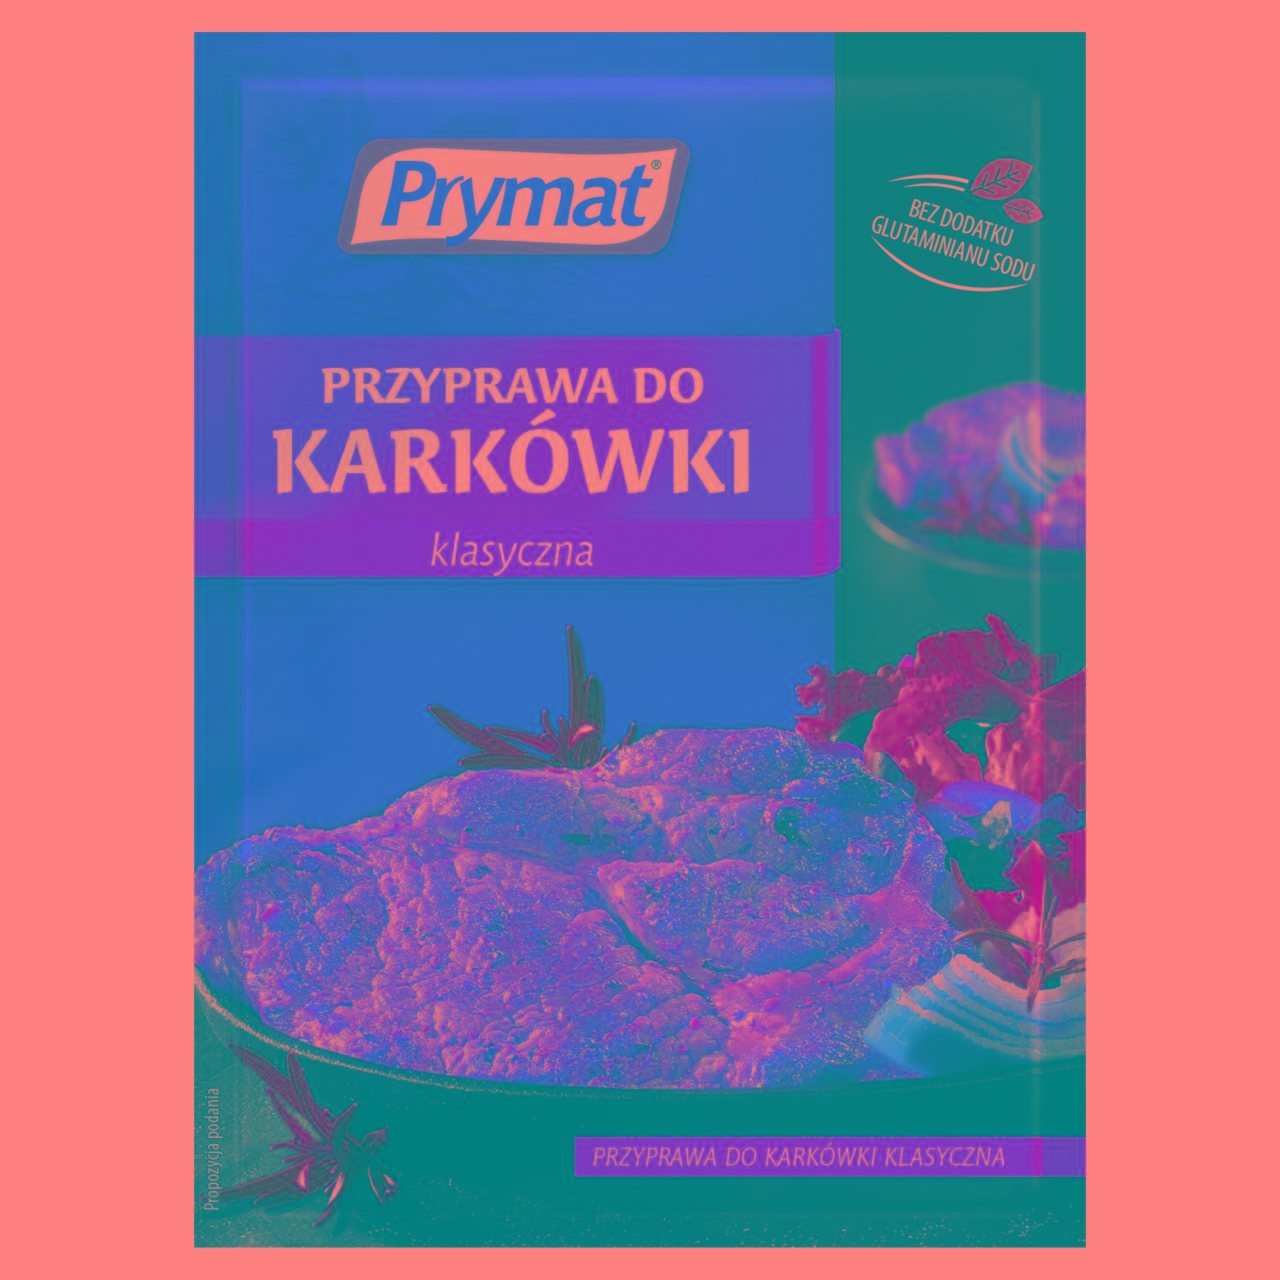 Photo - Prymat Classic Pork Neck Seasoning 20 g